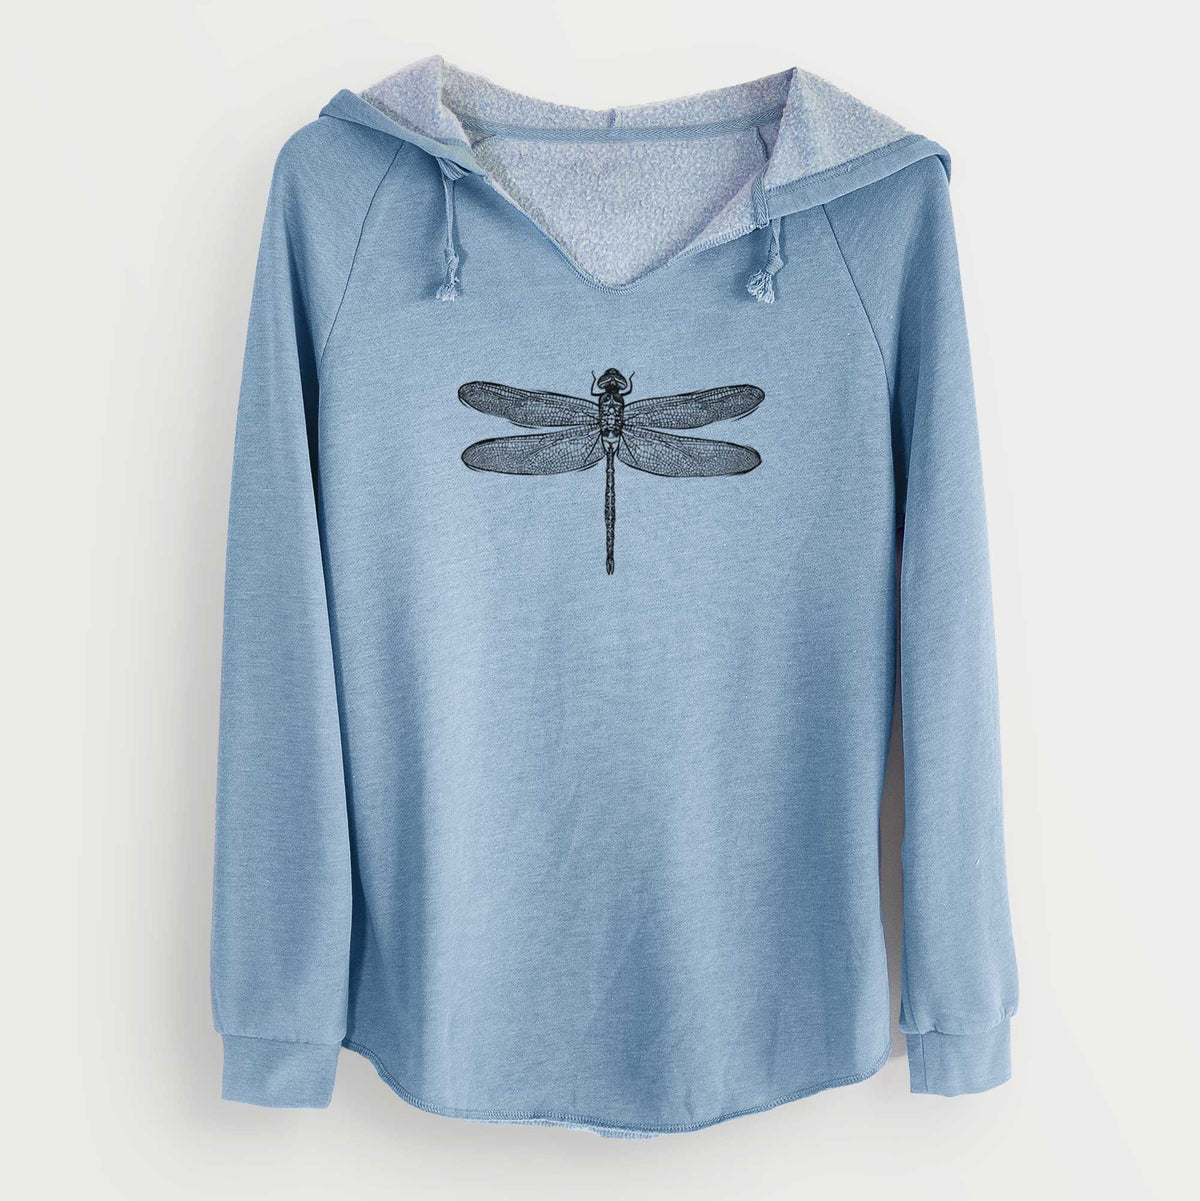 Anax Junius - Green Darner Dragonfly - Cali Wave Hooded Sweatshirt